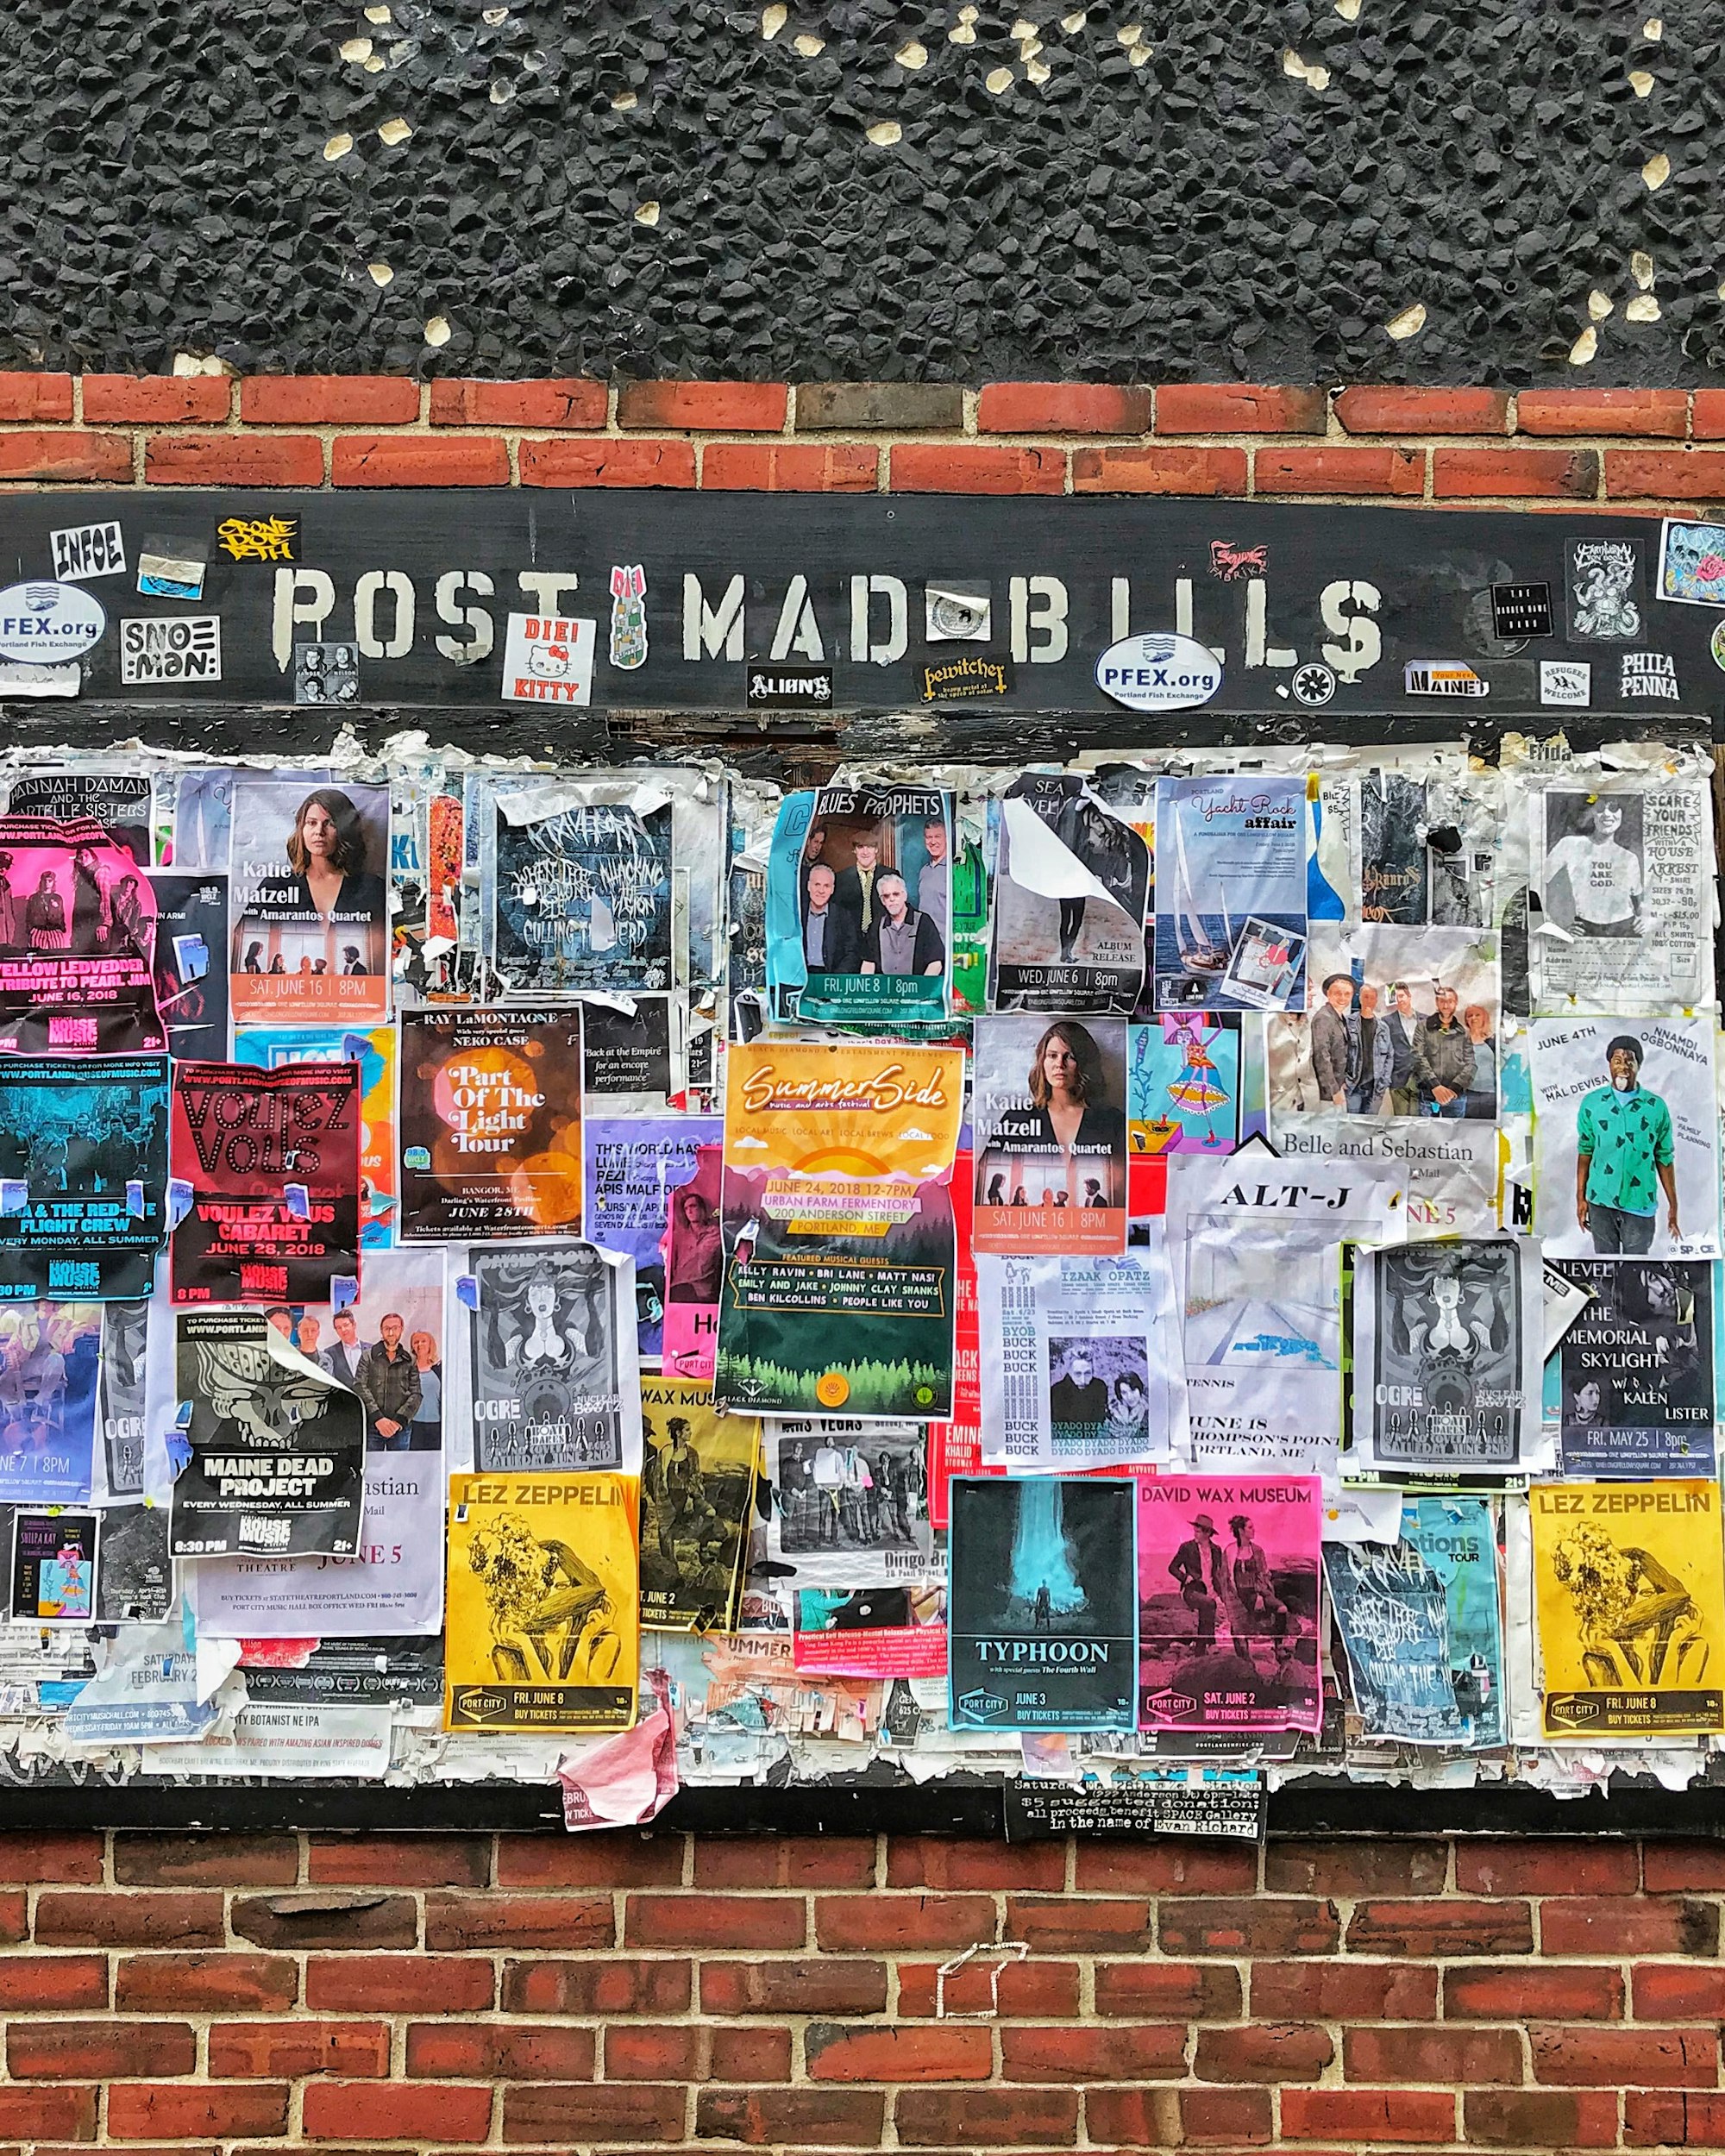 Post Mad Bills show board in Portland, Maine.